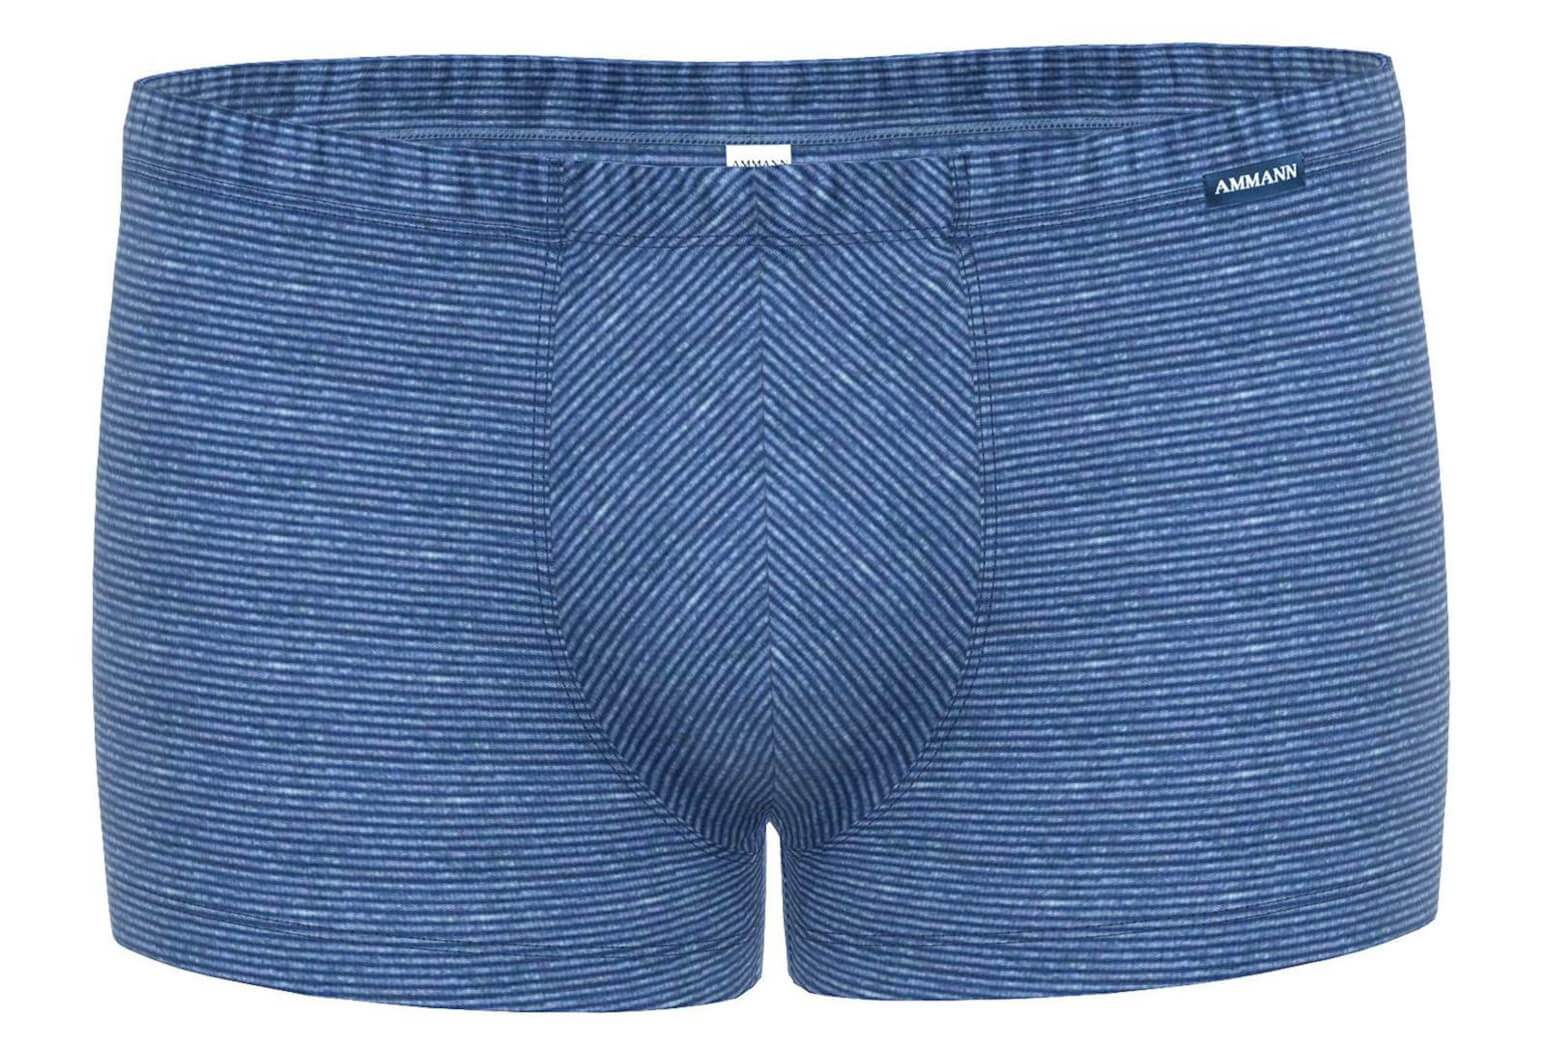 Ammann Jeans Single Herren Retro-Short